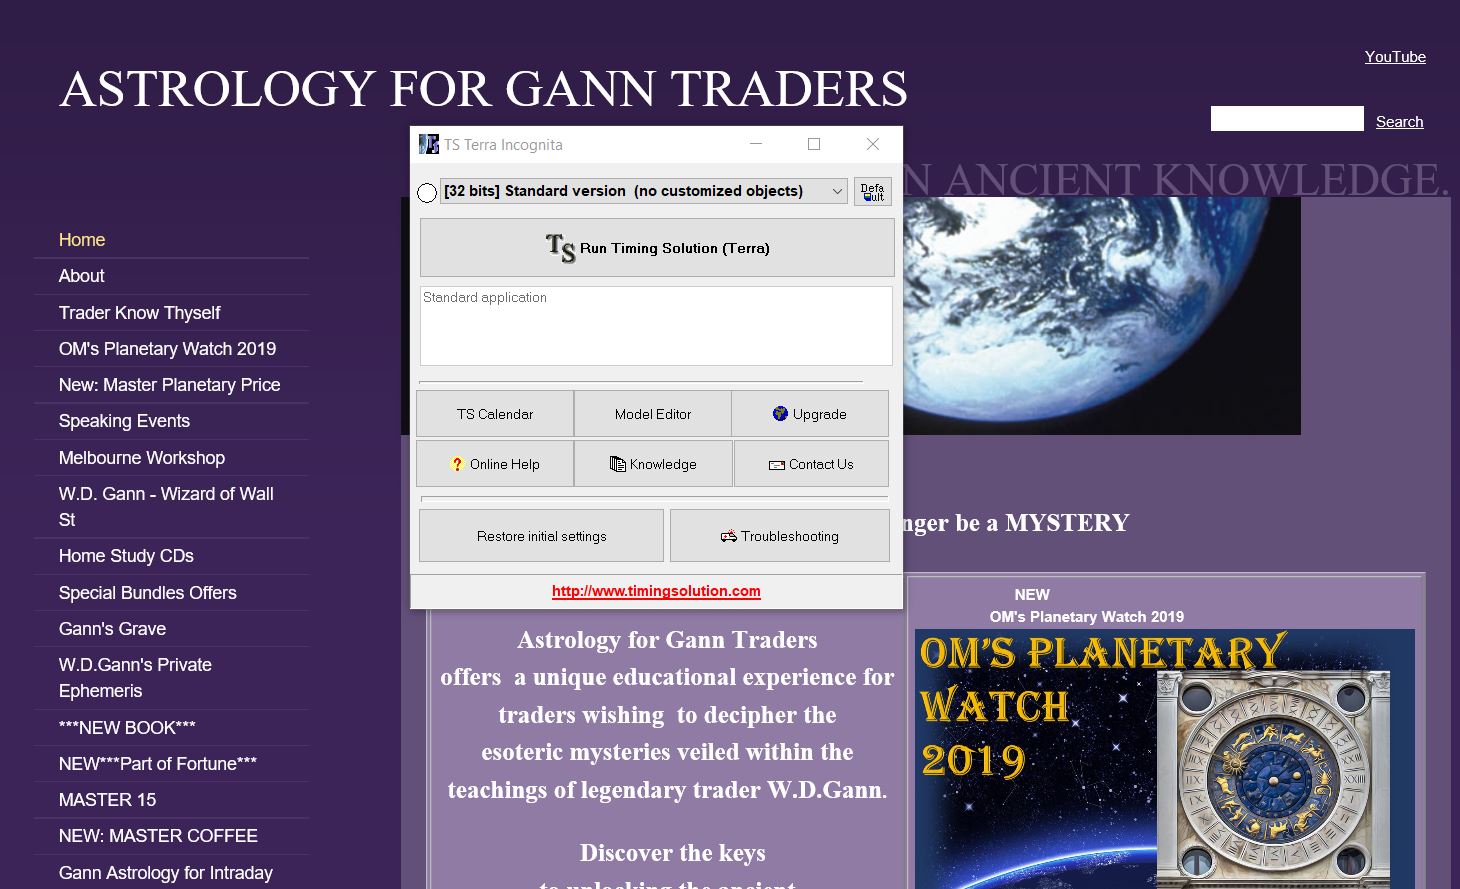 Timing Solution 
Olga Morales
Astrology for Gann Traders